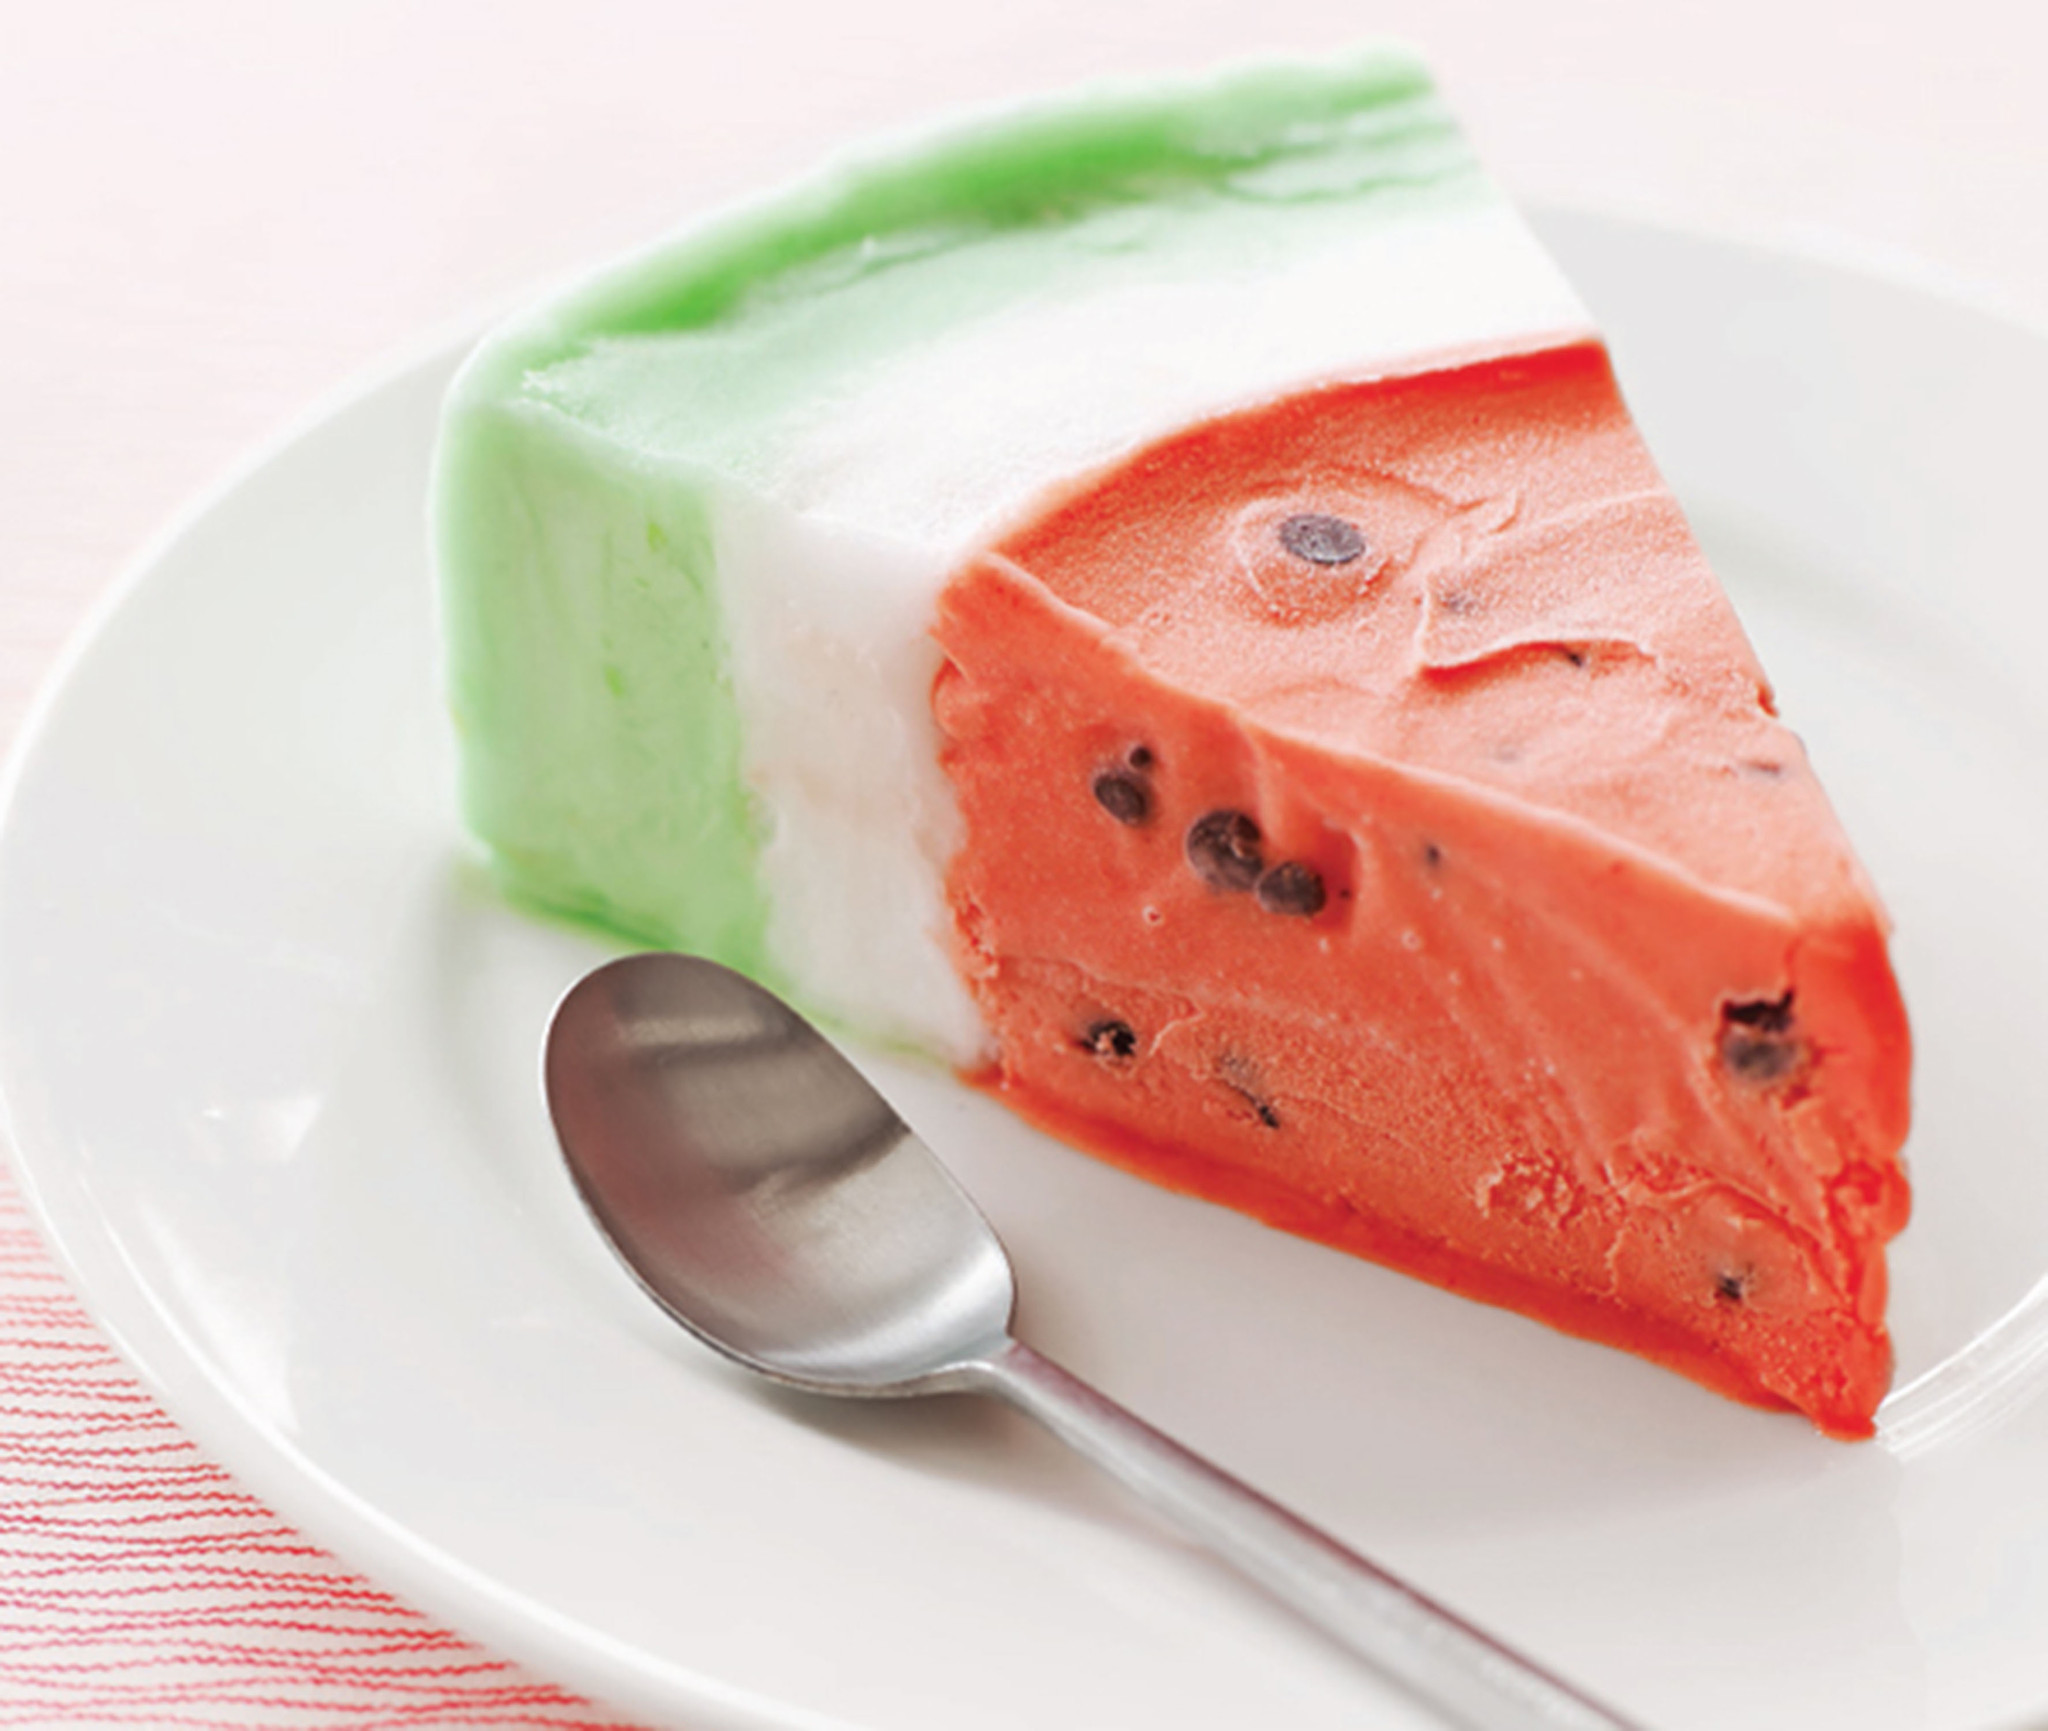 Watermelon cutie pie photo